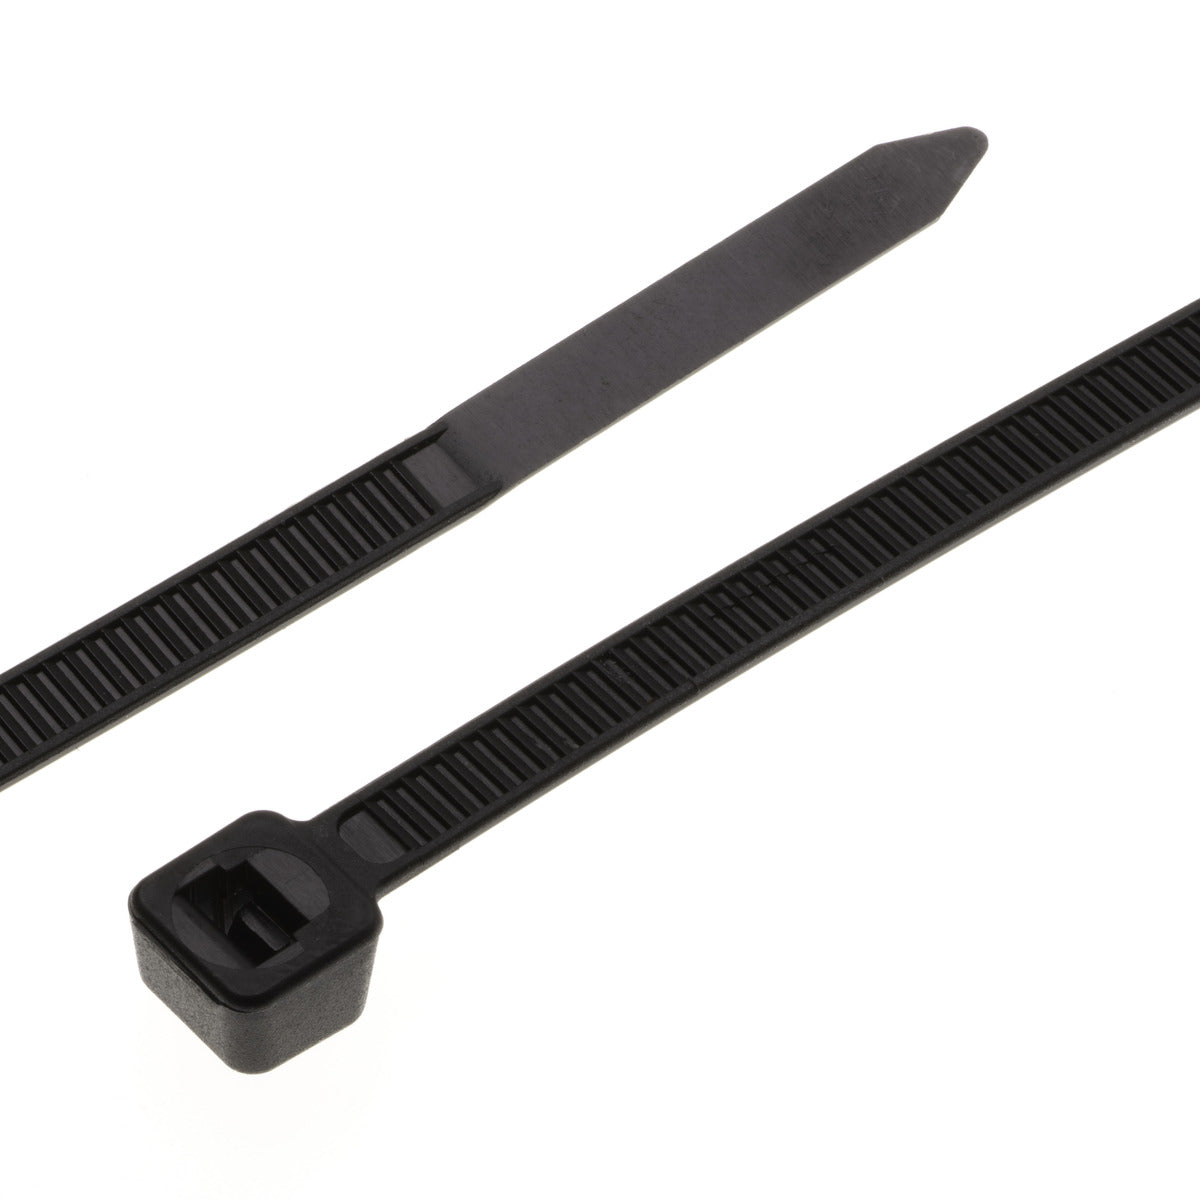 GRP-14500 Cable Tie Black 14" 50lb 100PK